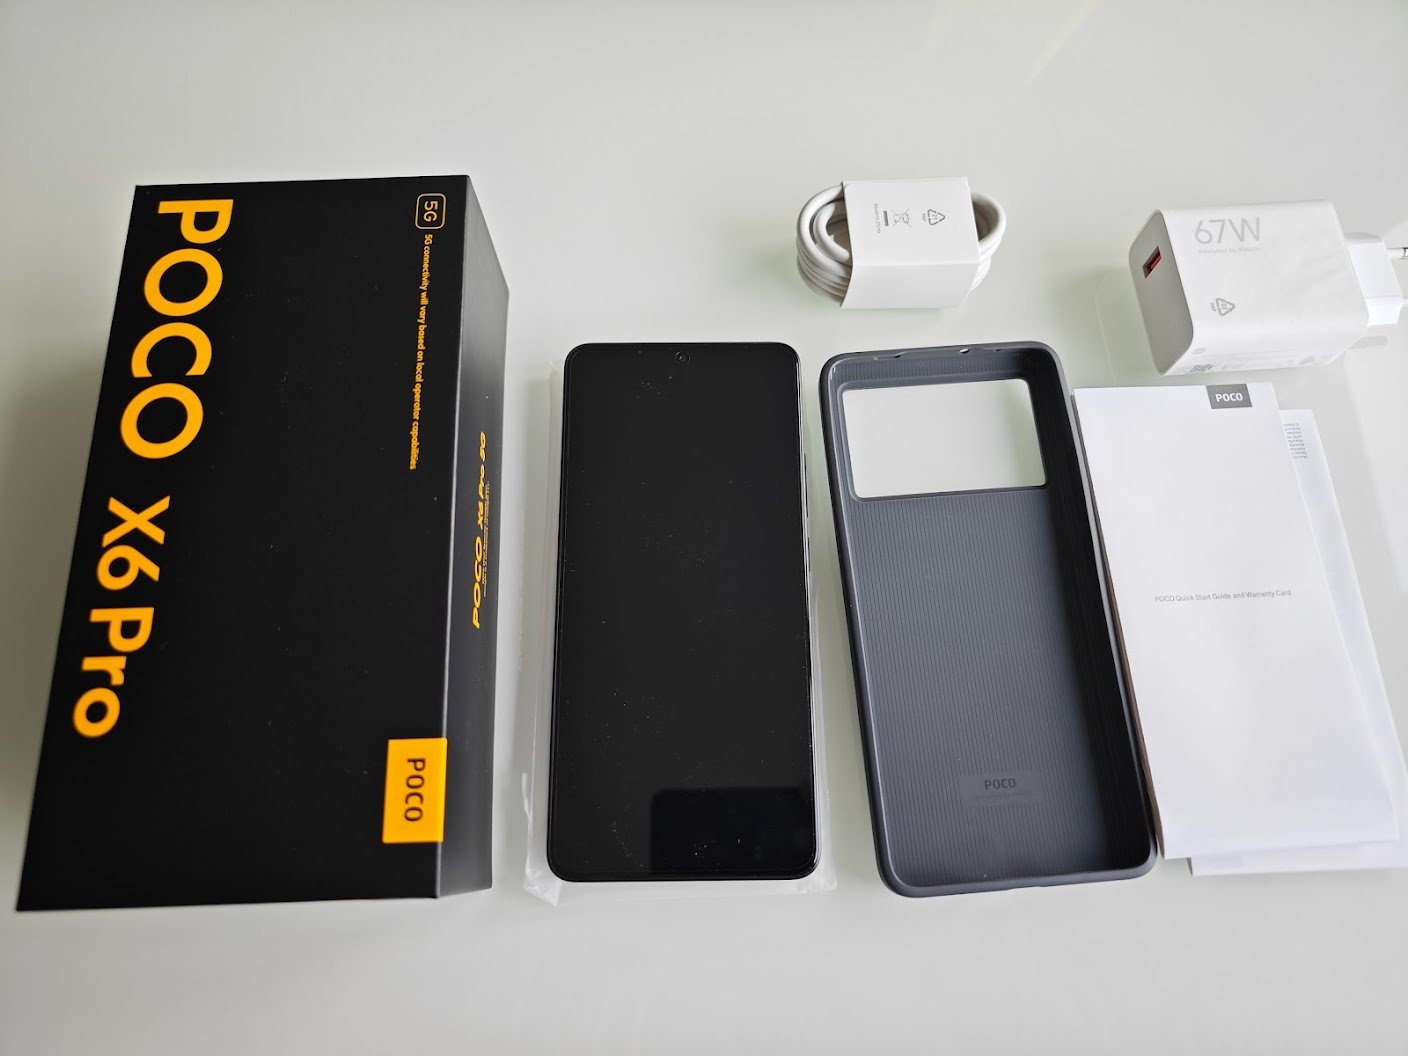 Smartphone Xiaomi Poco X6 Pro 5G 8GB RAM 256GB ROM Negro